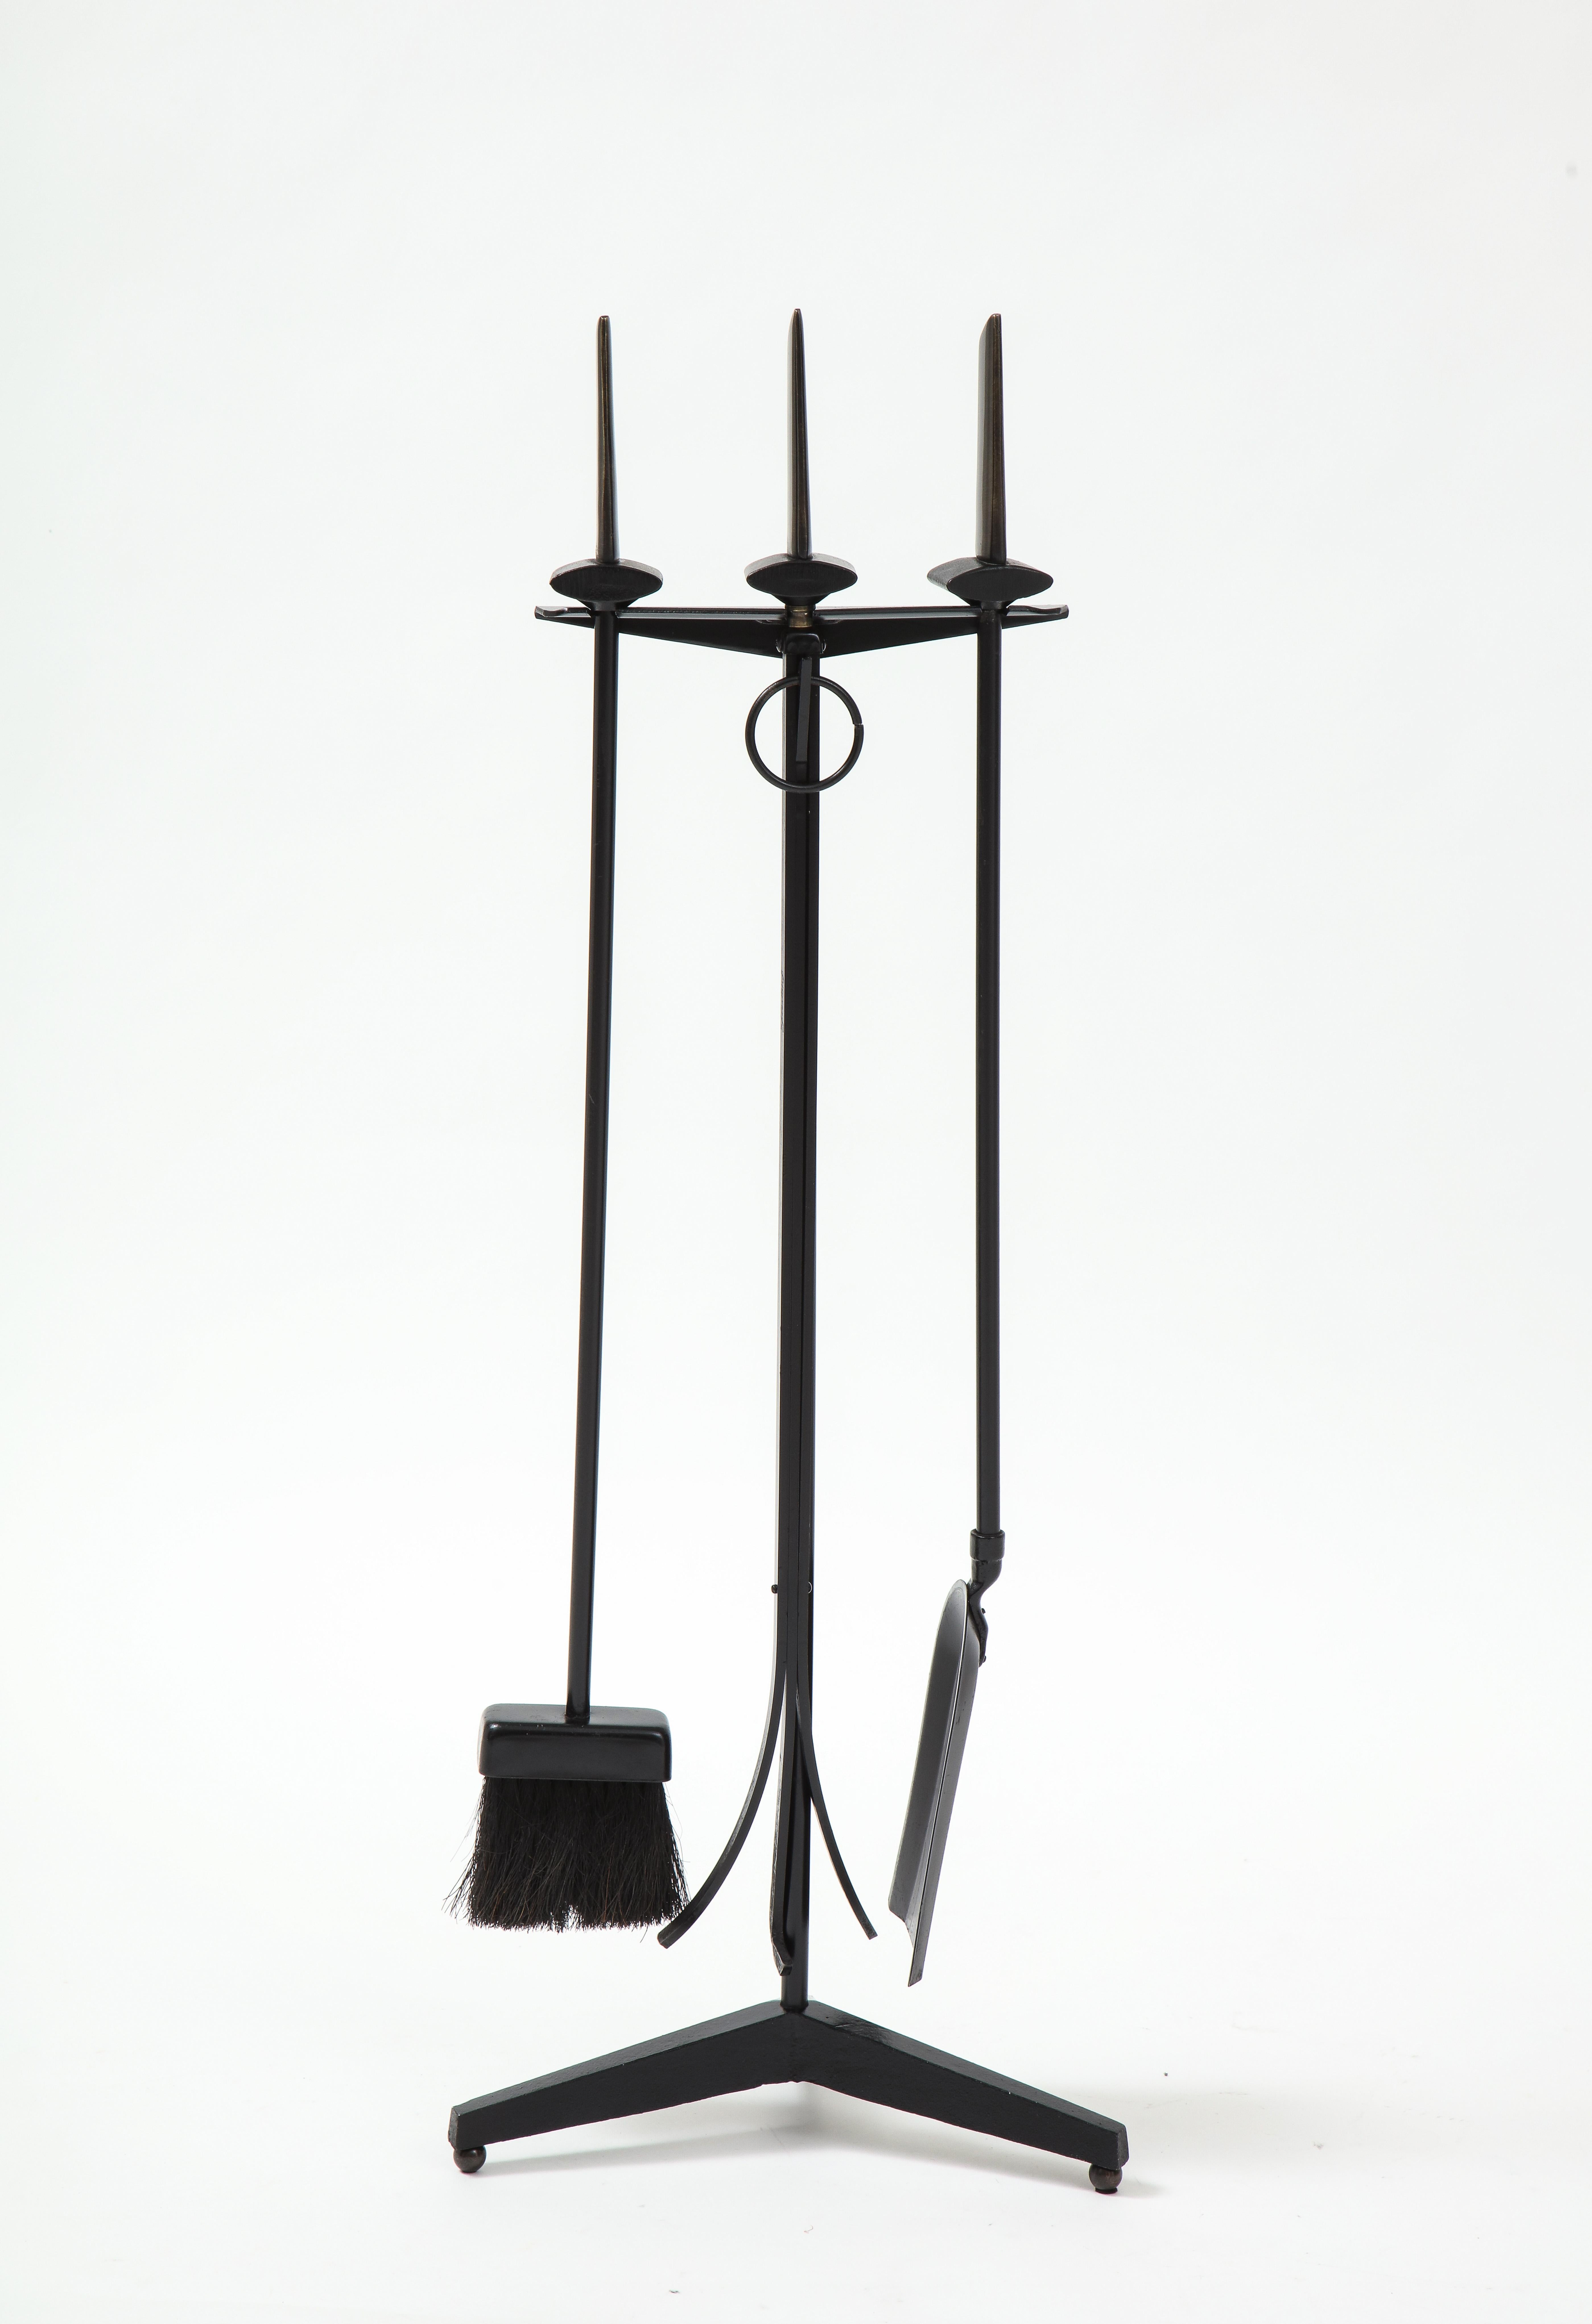 Set of Art Deco firetools in a black enamel finish with custom finshed bronze blade handles. Set includes poker, shovel, broom and stand.